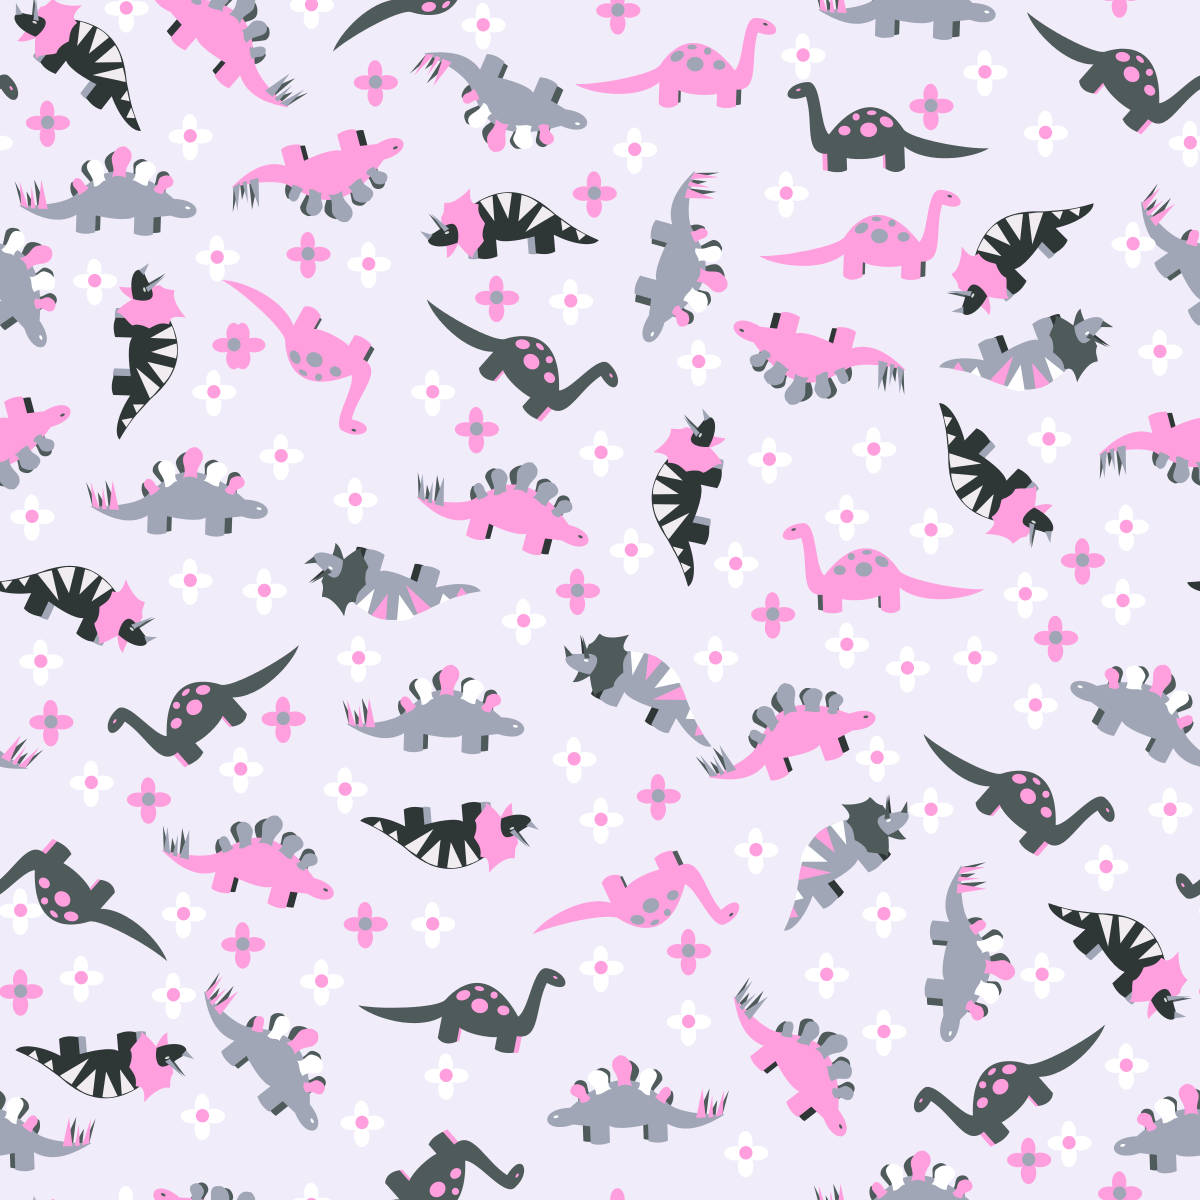 Top 999+ Cute Pink Dinosaur Wallpaper Full HD, 4K✅Free to Use